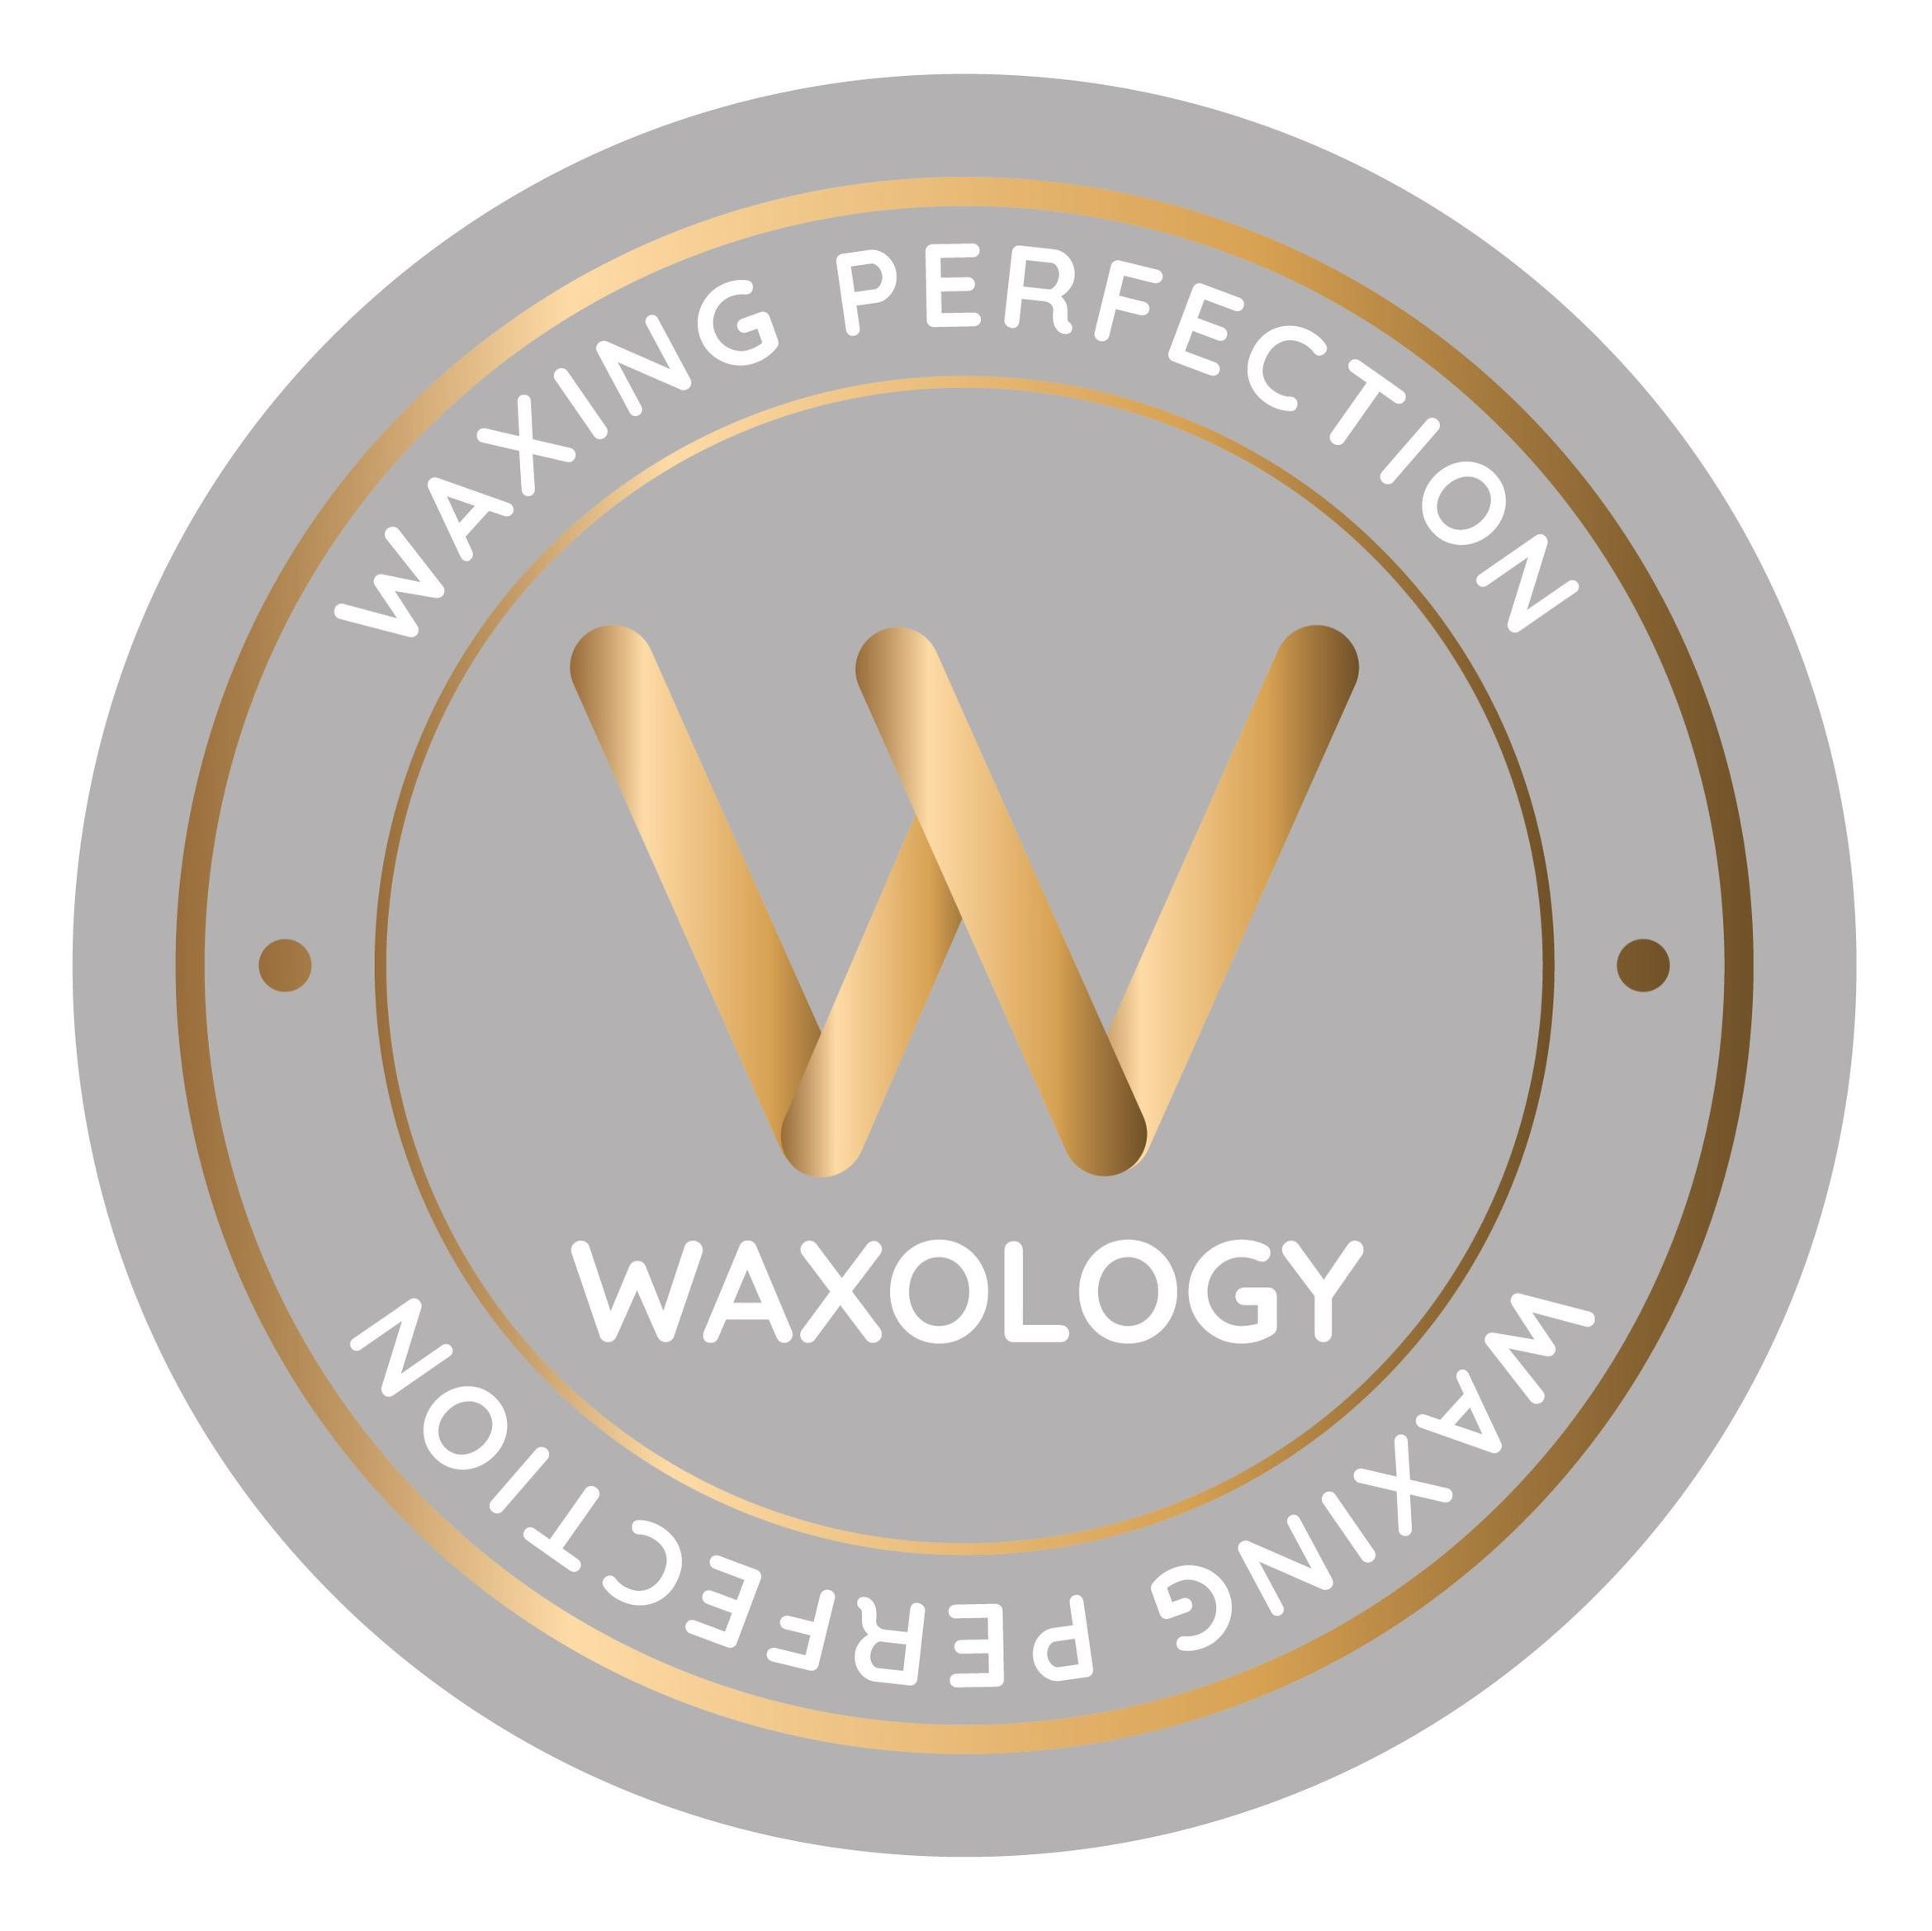 Waxology, 15a Three Tuns Lane, L37 4AG, Liverpool